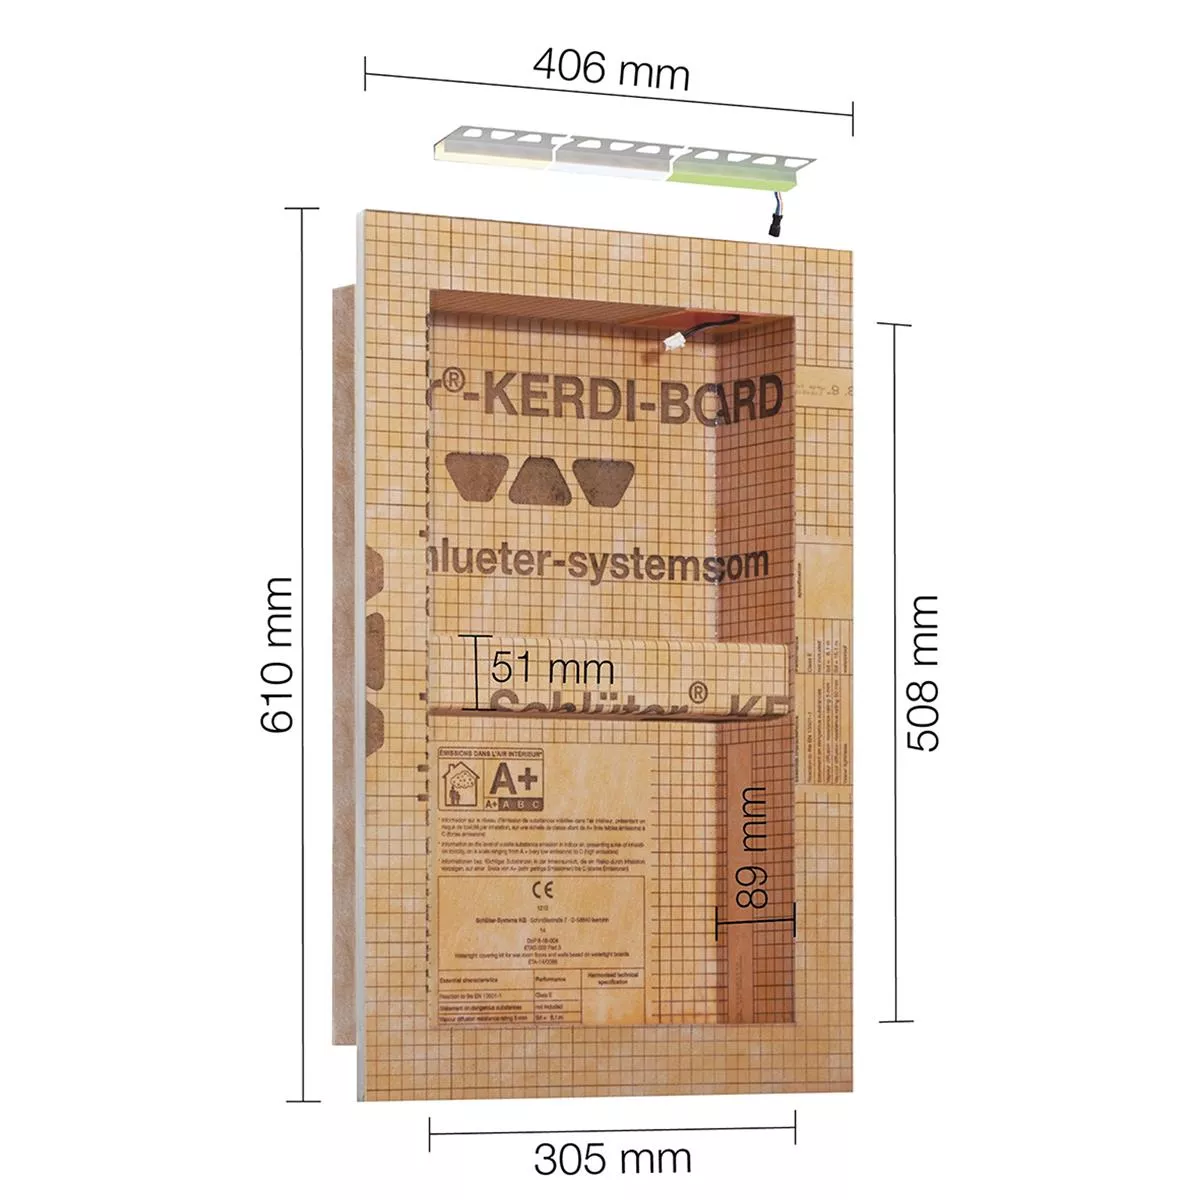 Schlüter Kerdi Board NLT Nischen Set LED-Beleuchtung Warmweiß 30,5x50,8x0,89 cm